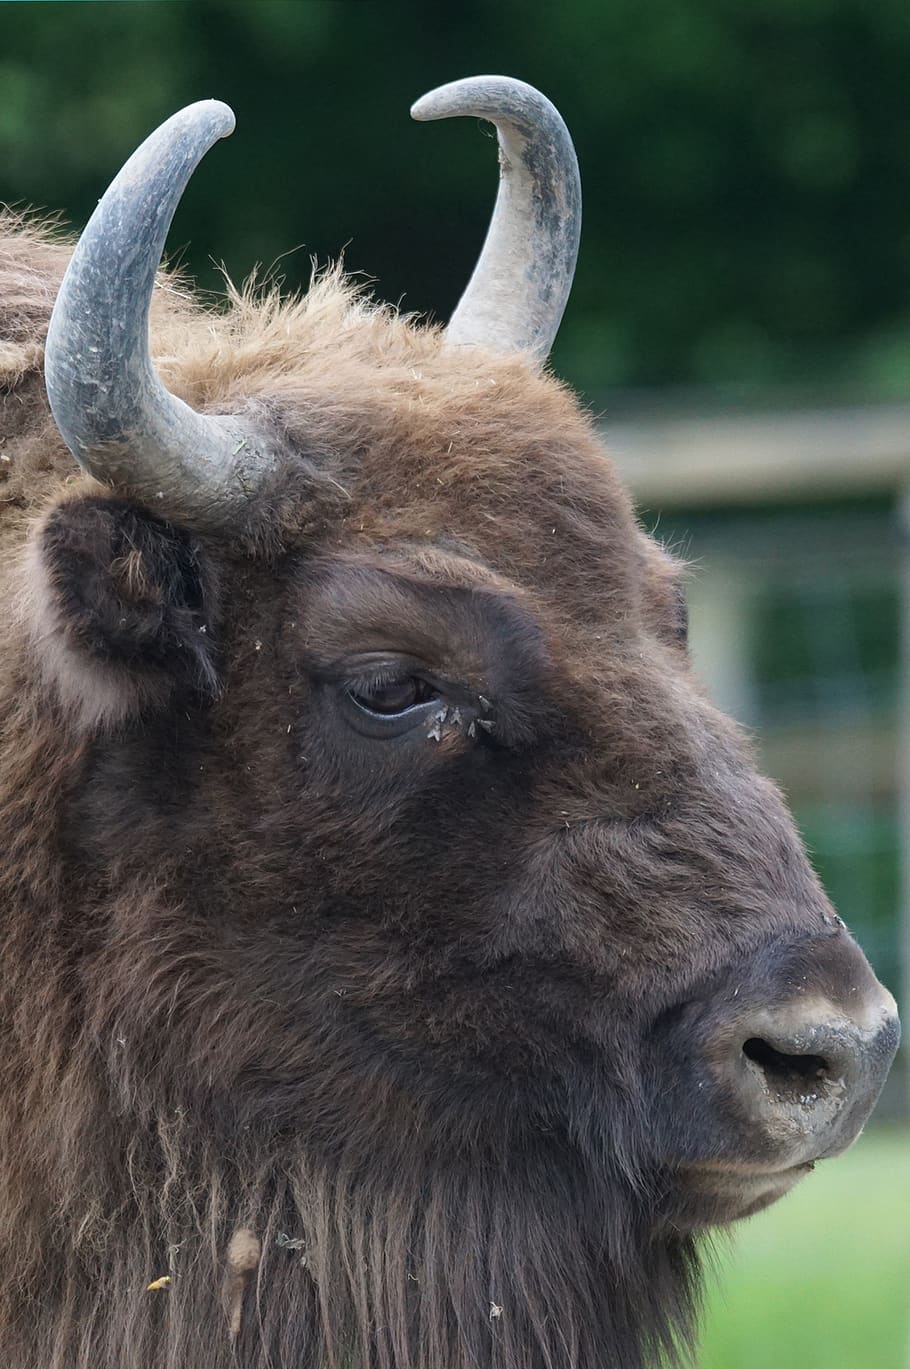 wisent, european bison, horned, bull, beef, portrait, bison bonasus, animal themes, animal, mammal